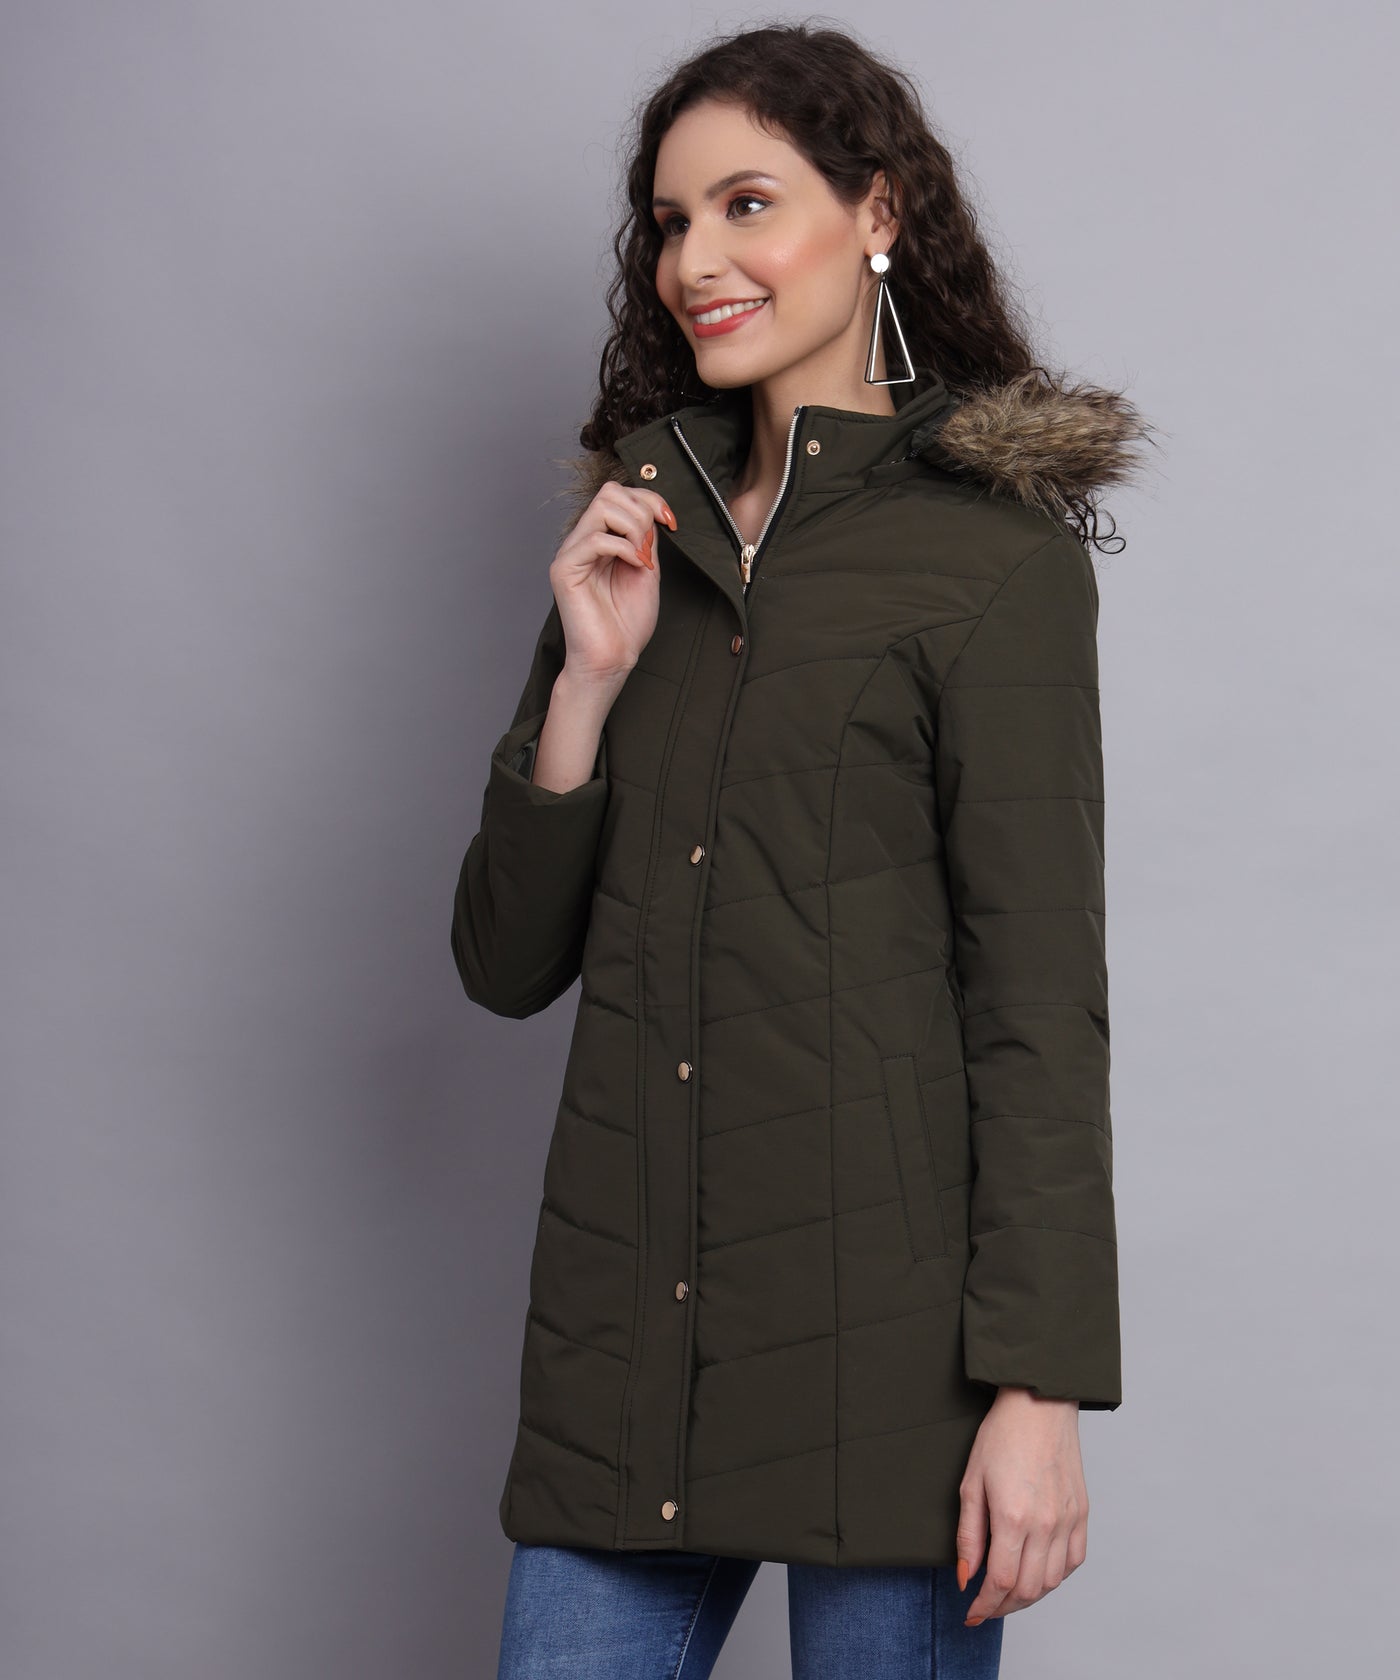 D Olive Medium length jacket-AW6194